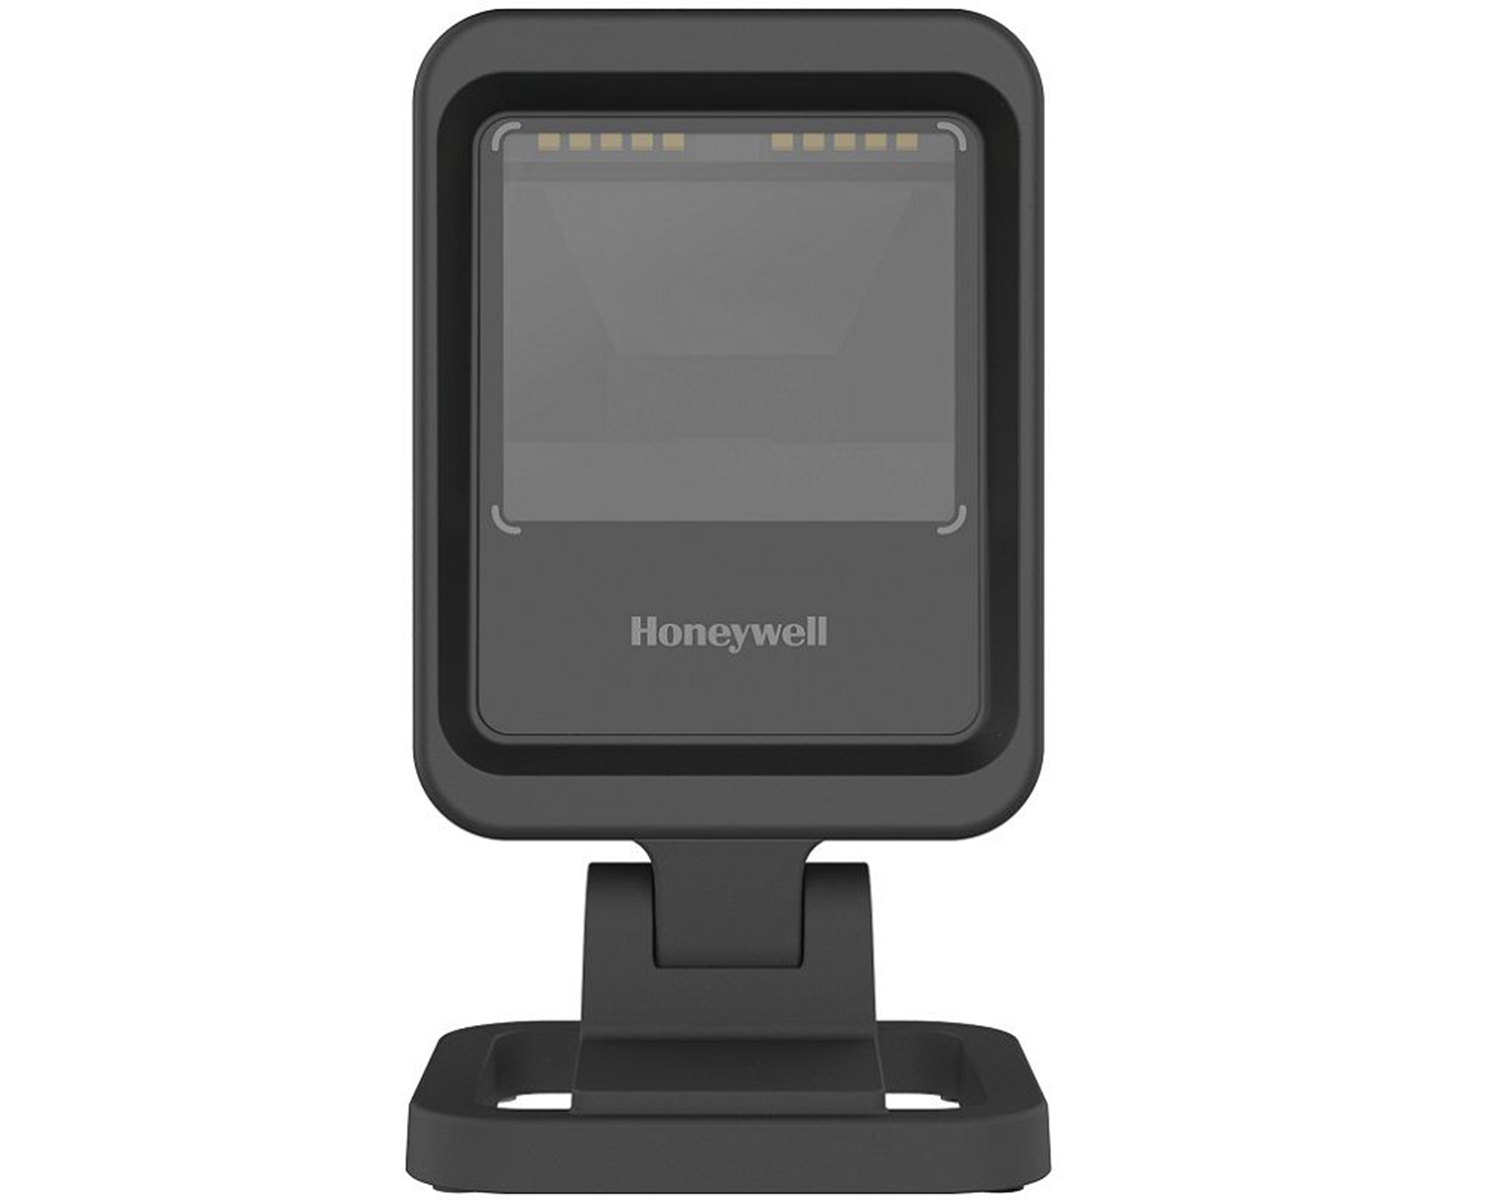 Honeywell Genesis XP 7680g